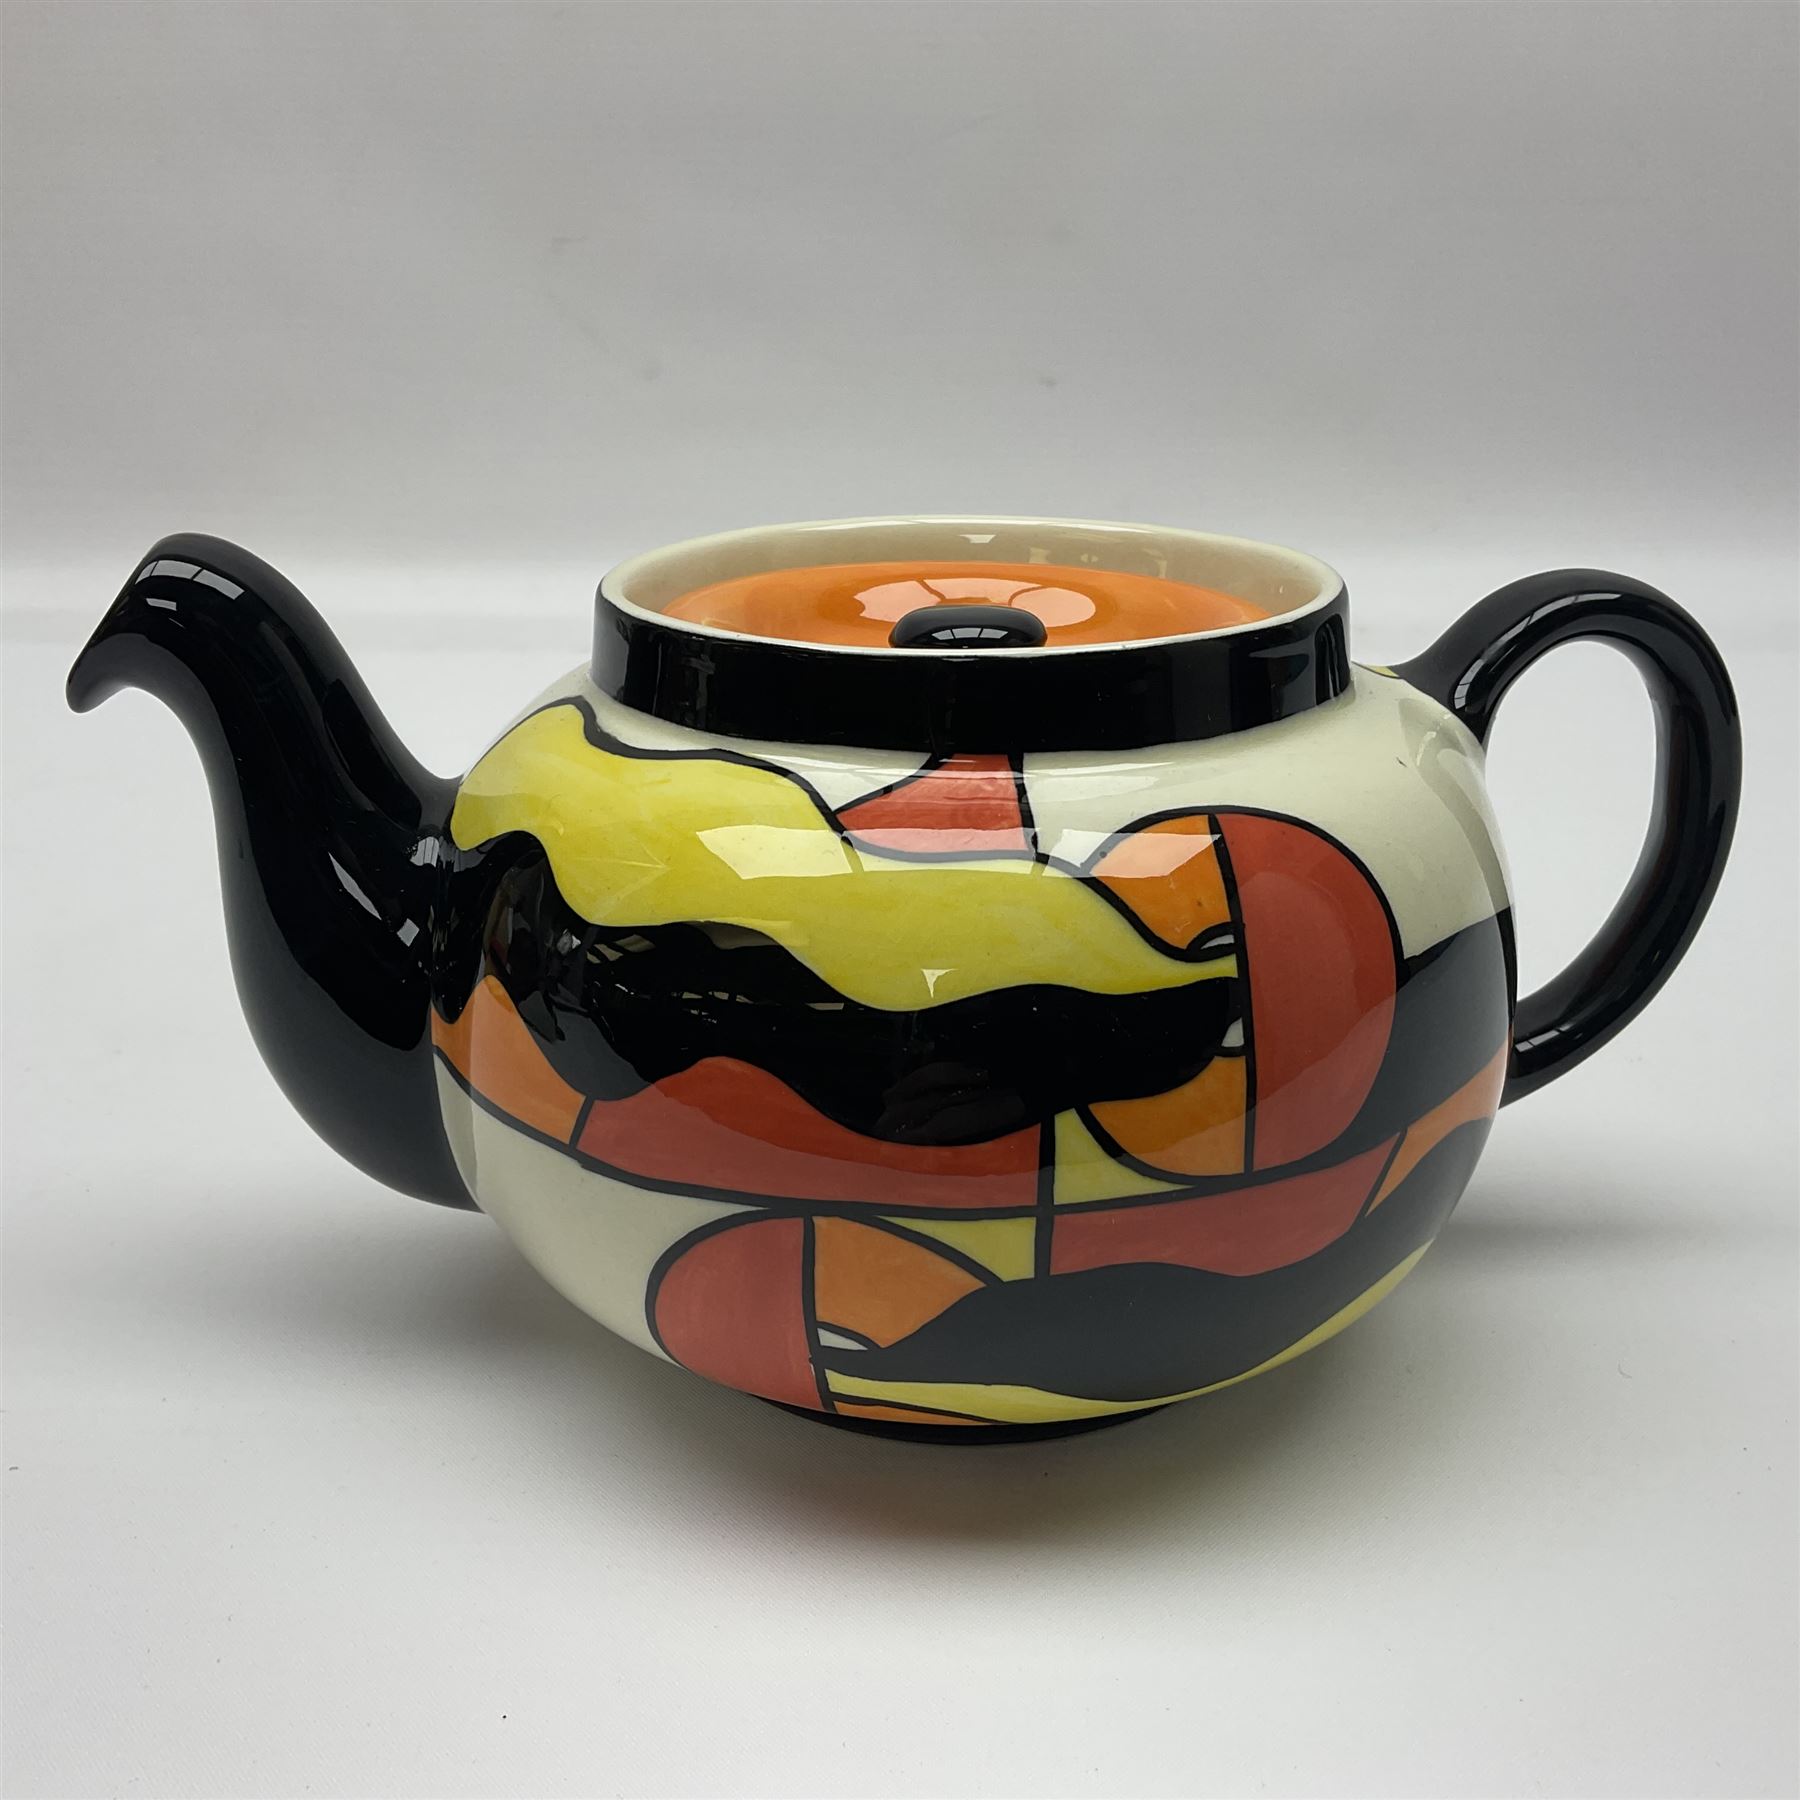 Lorna Bailey Mirage pattern teapot - Image 11 of 12